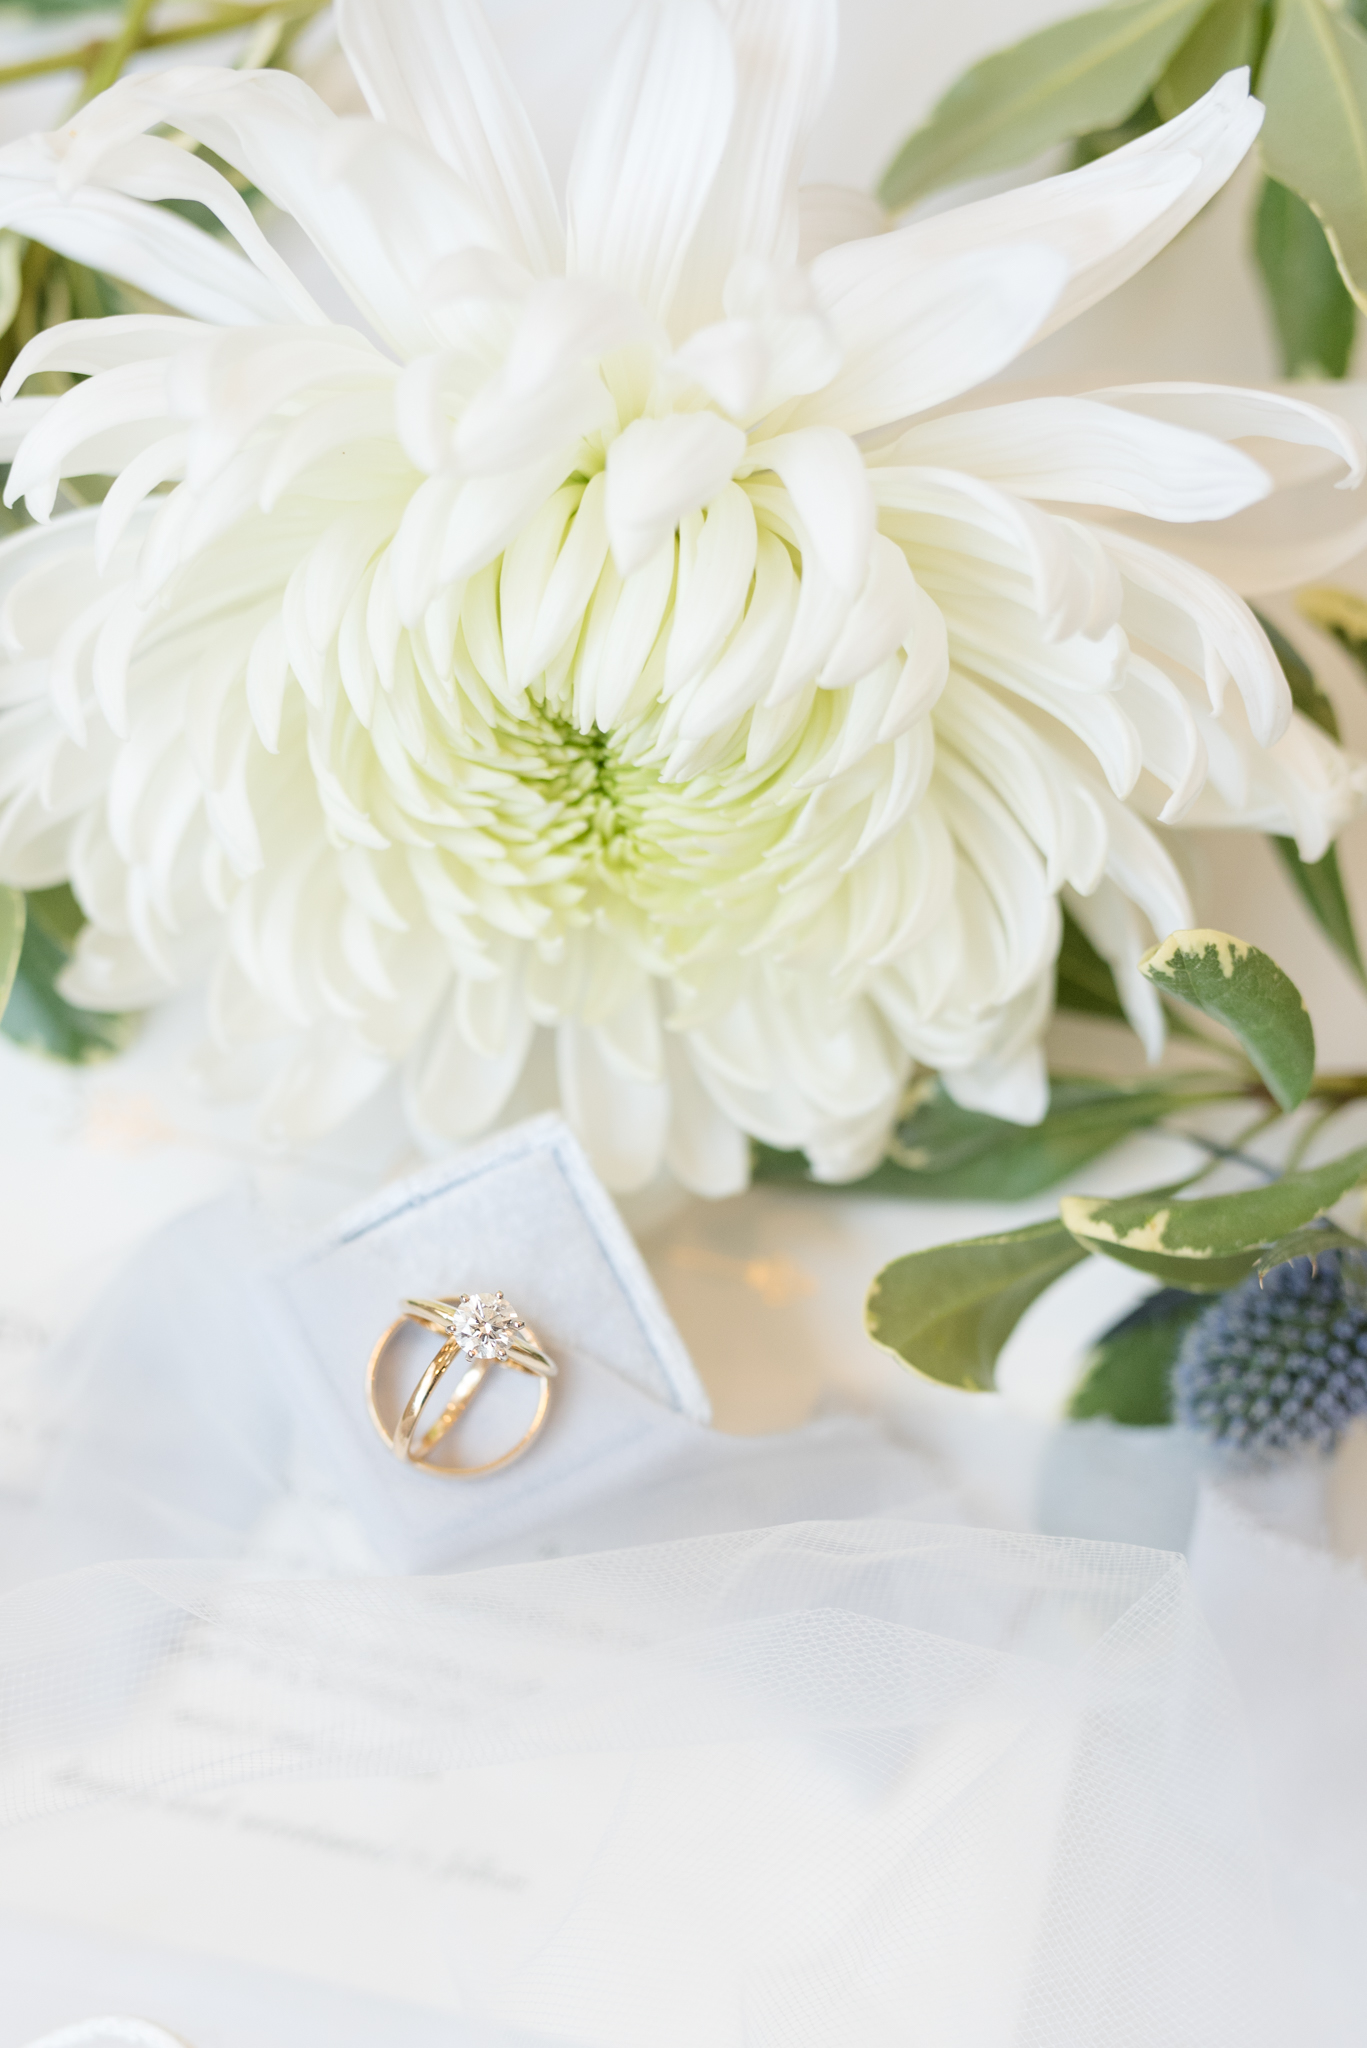 Wedding rings sit next to white flower.